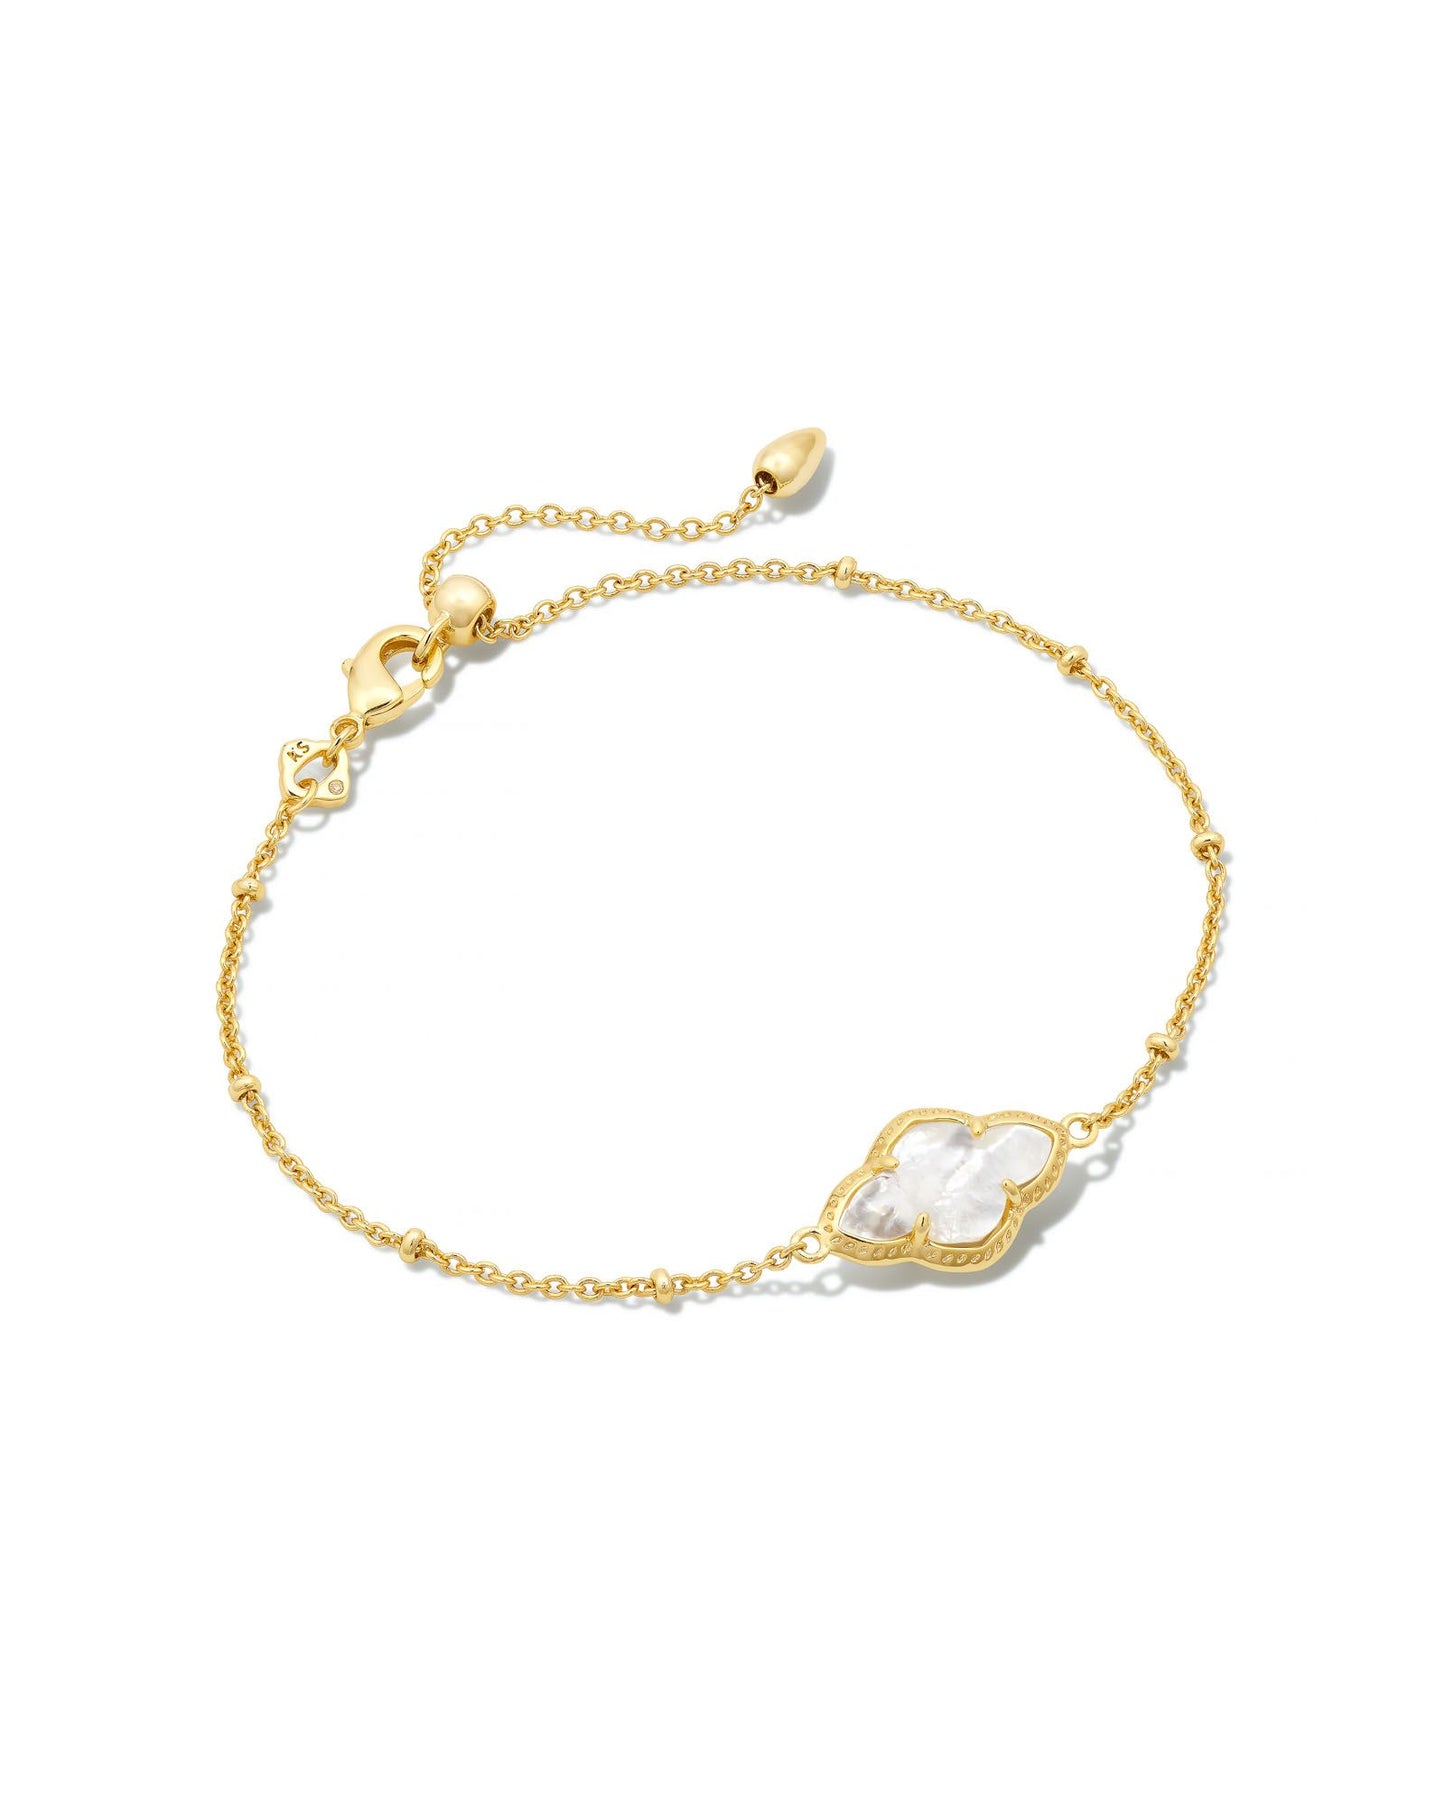 Abbie Satellite Chain Bracelet | KENDRA SCOTT - The Street Boutique 